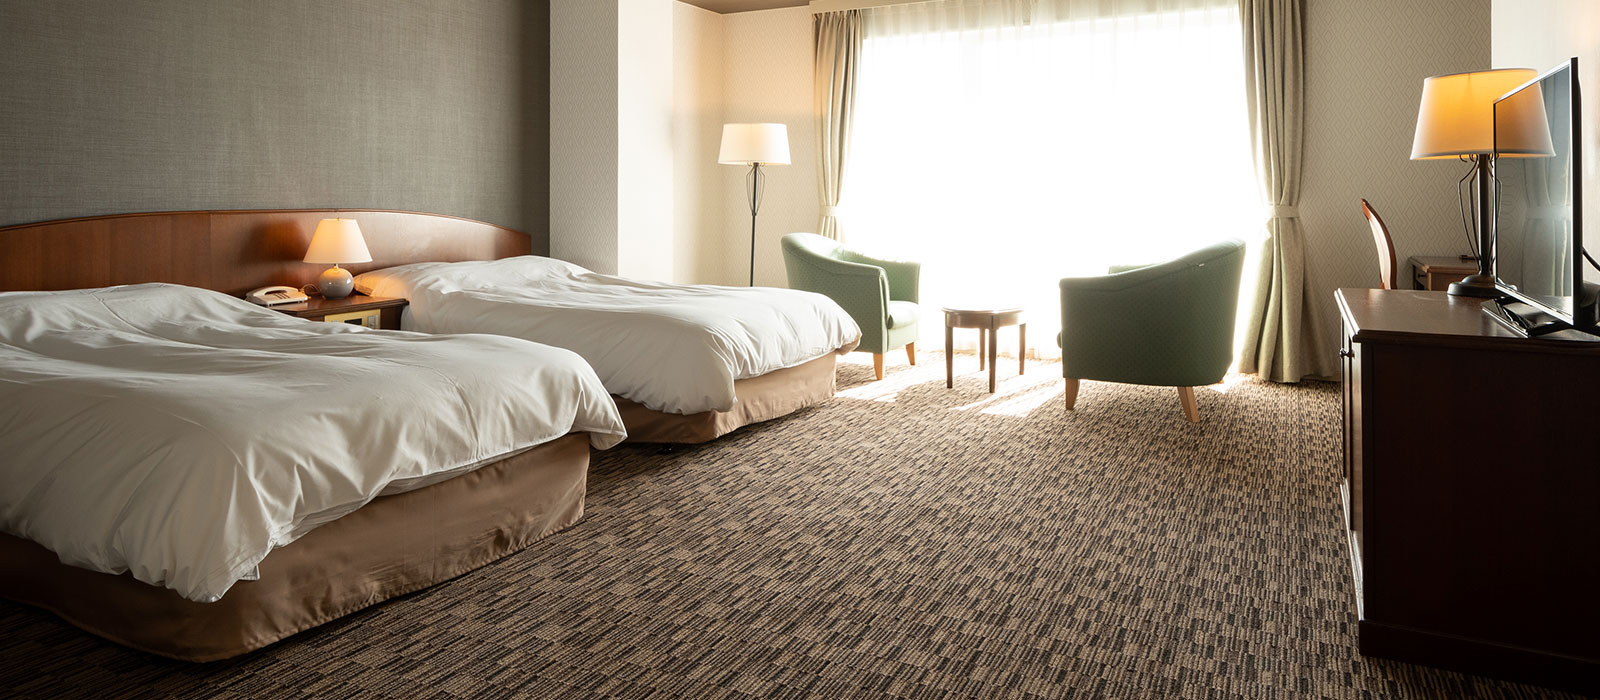 Hashidate bay hotel:guest rooms